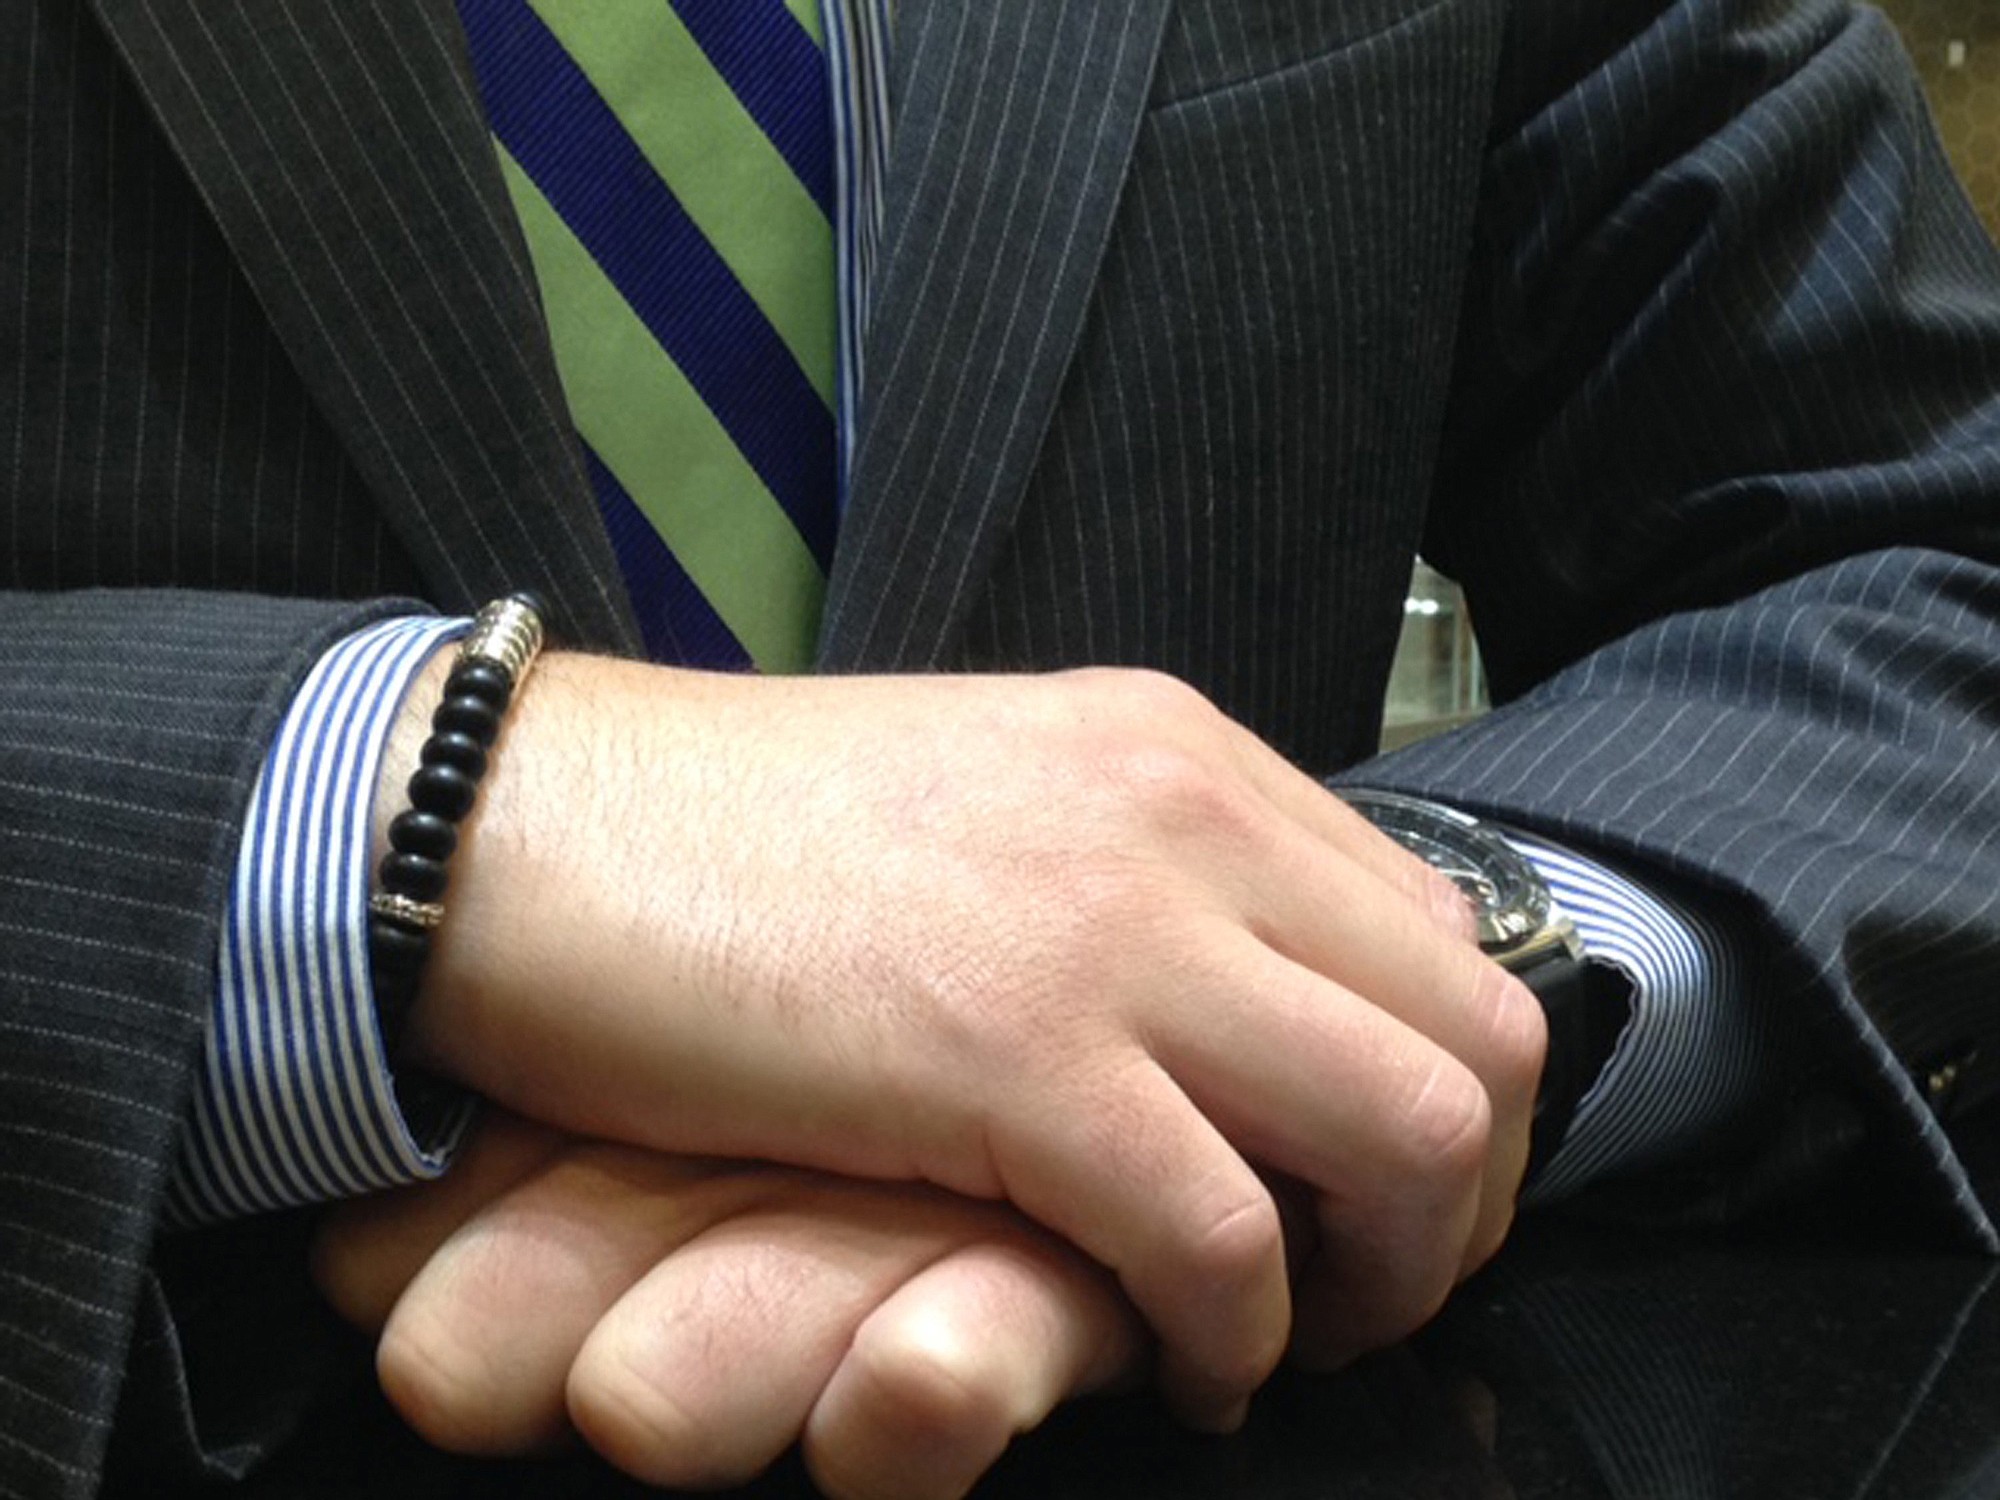 Wrist watch: Men embrace bracelets, too - The Columbian